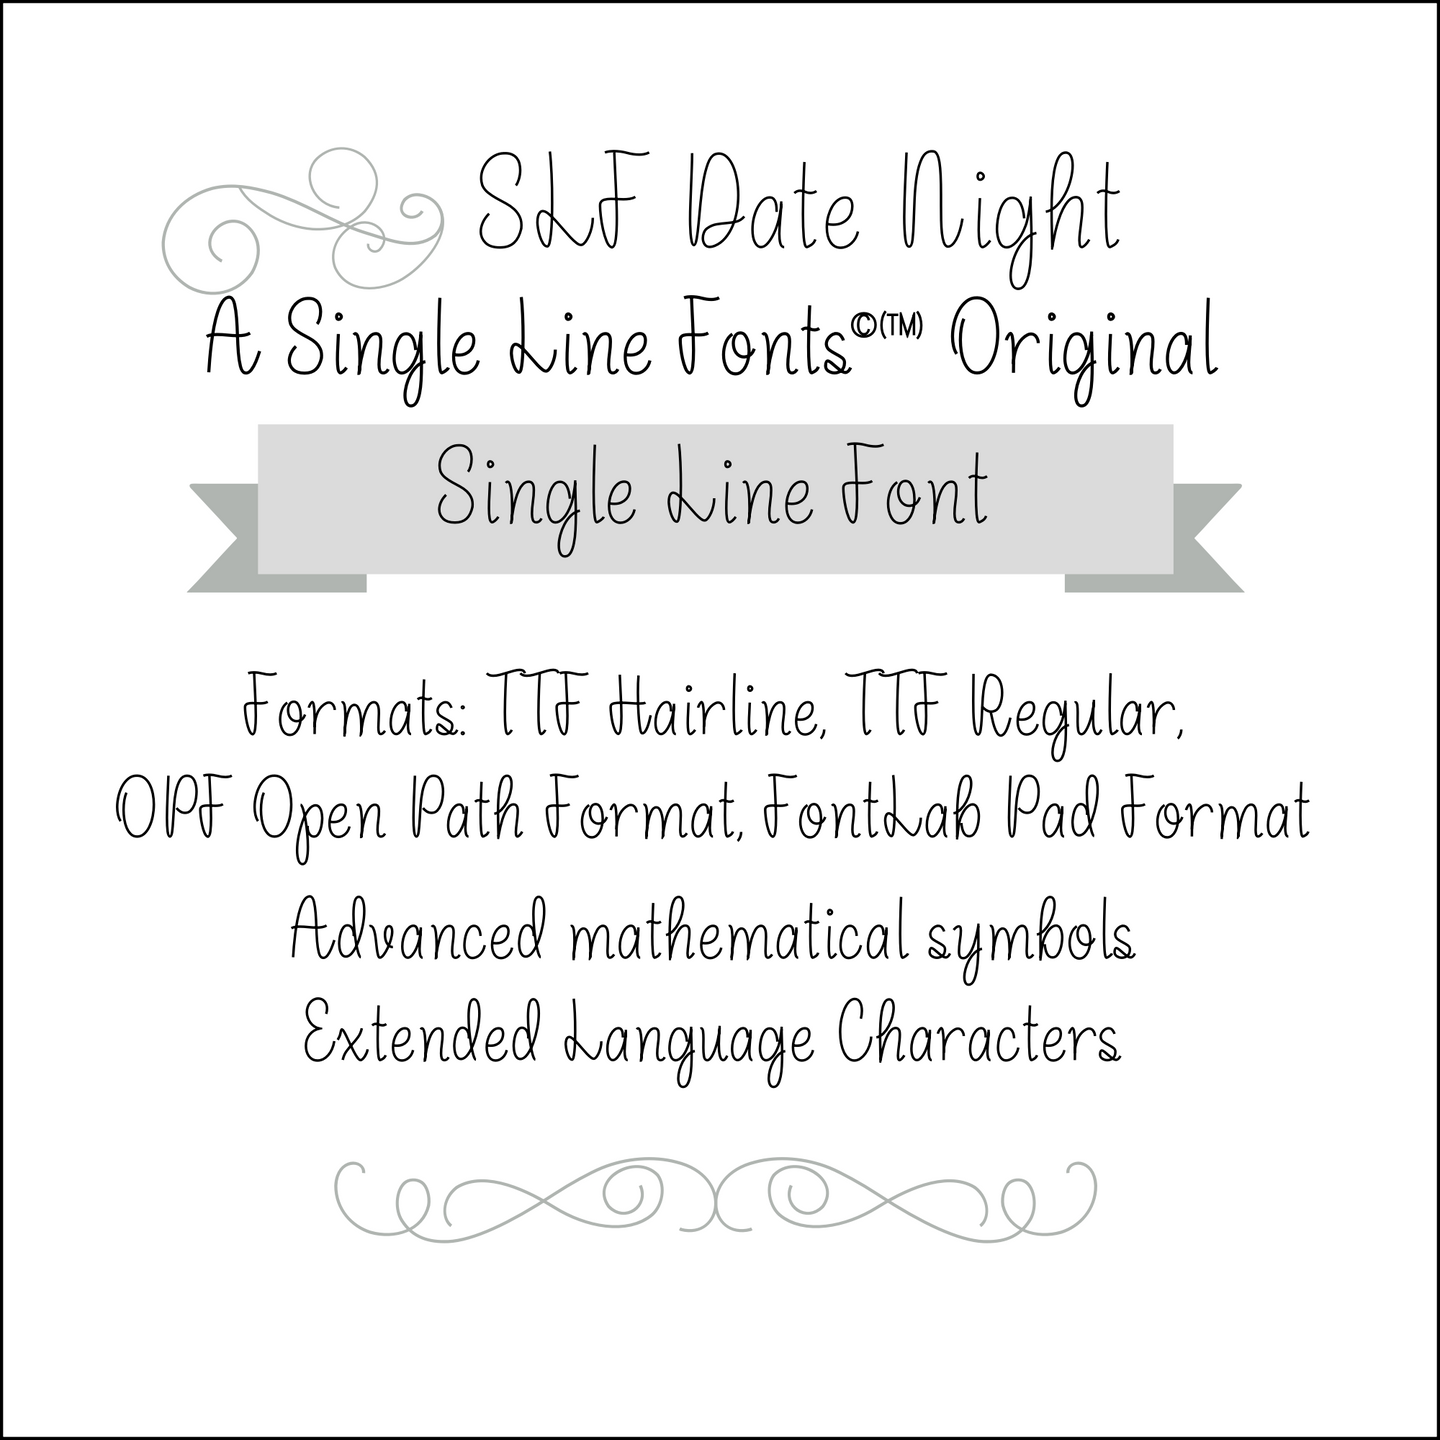 SLF Date Night